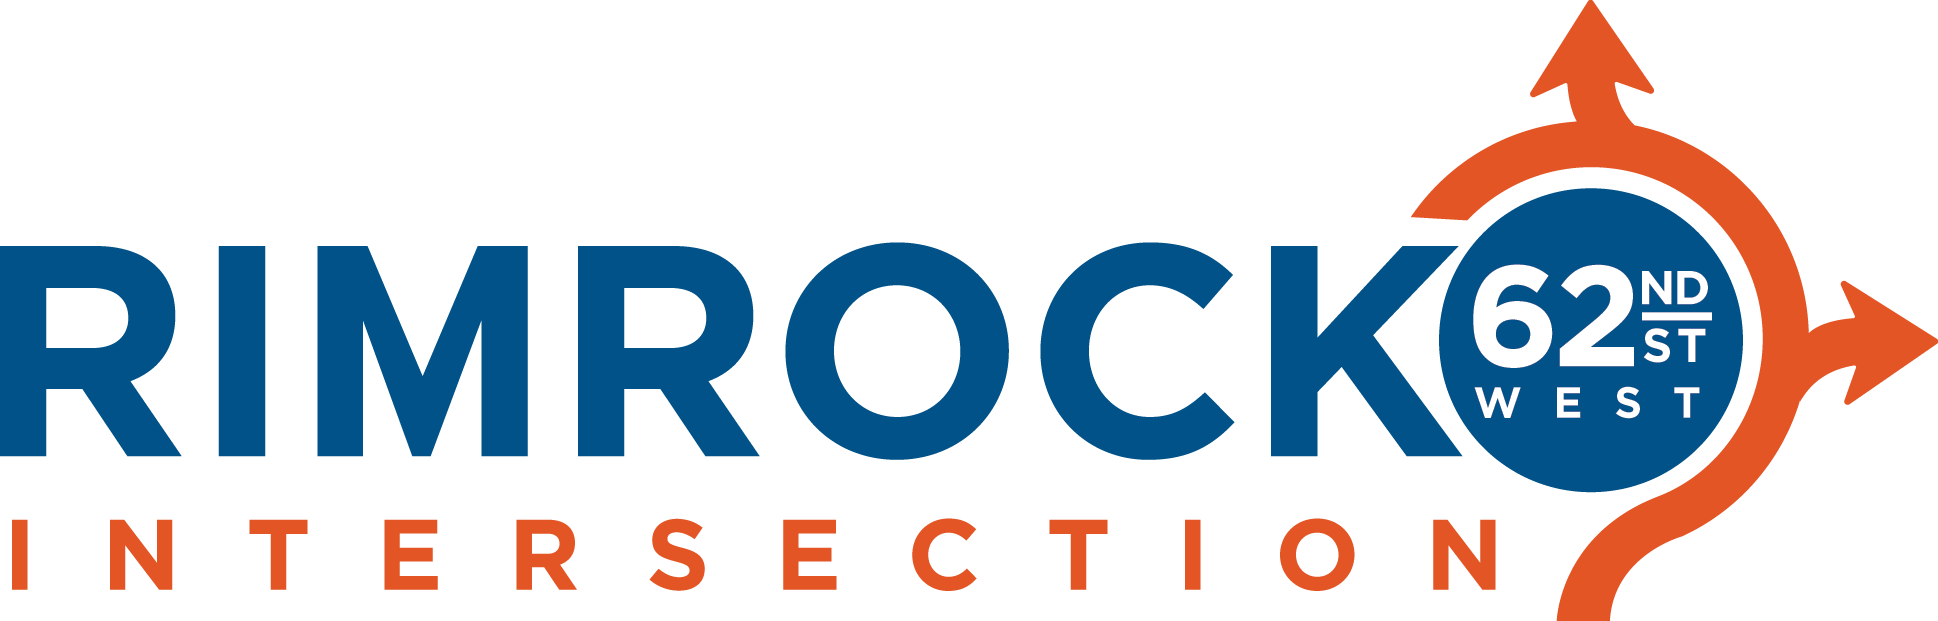 Rimrock logo